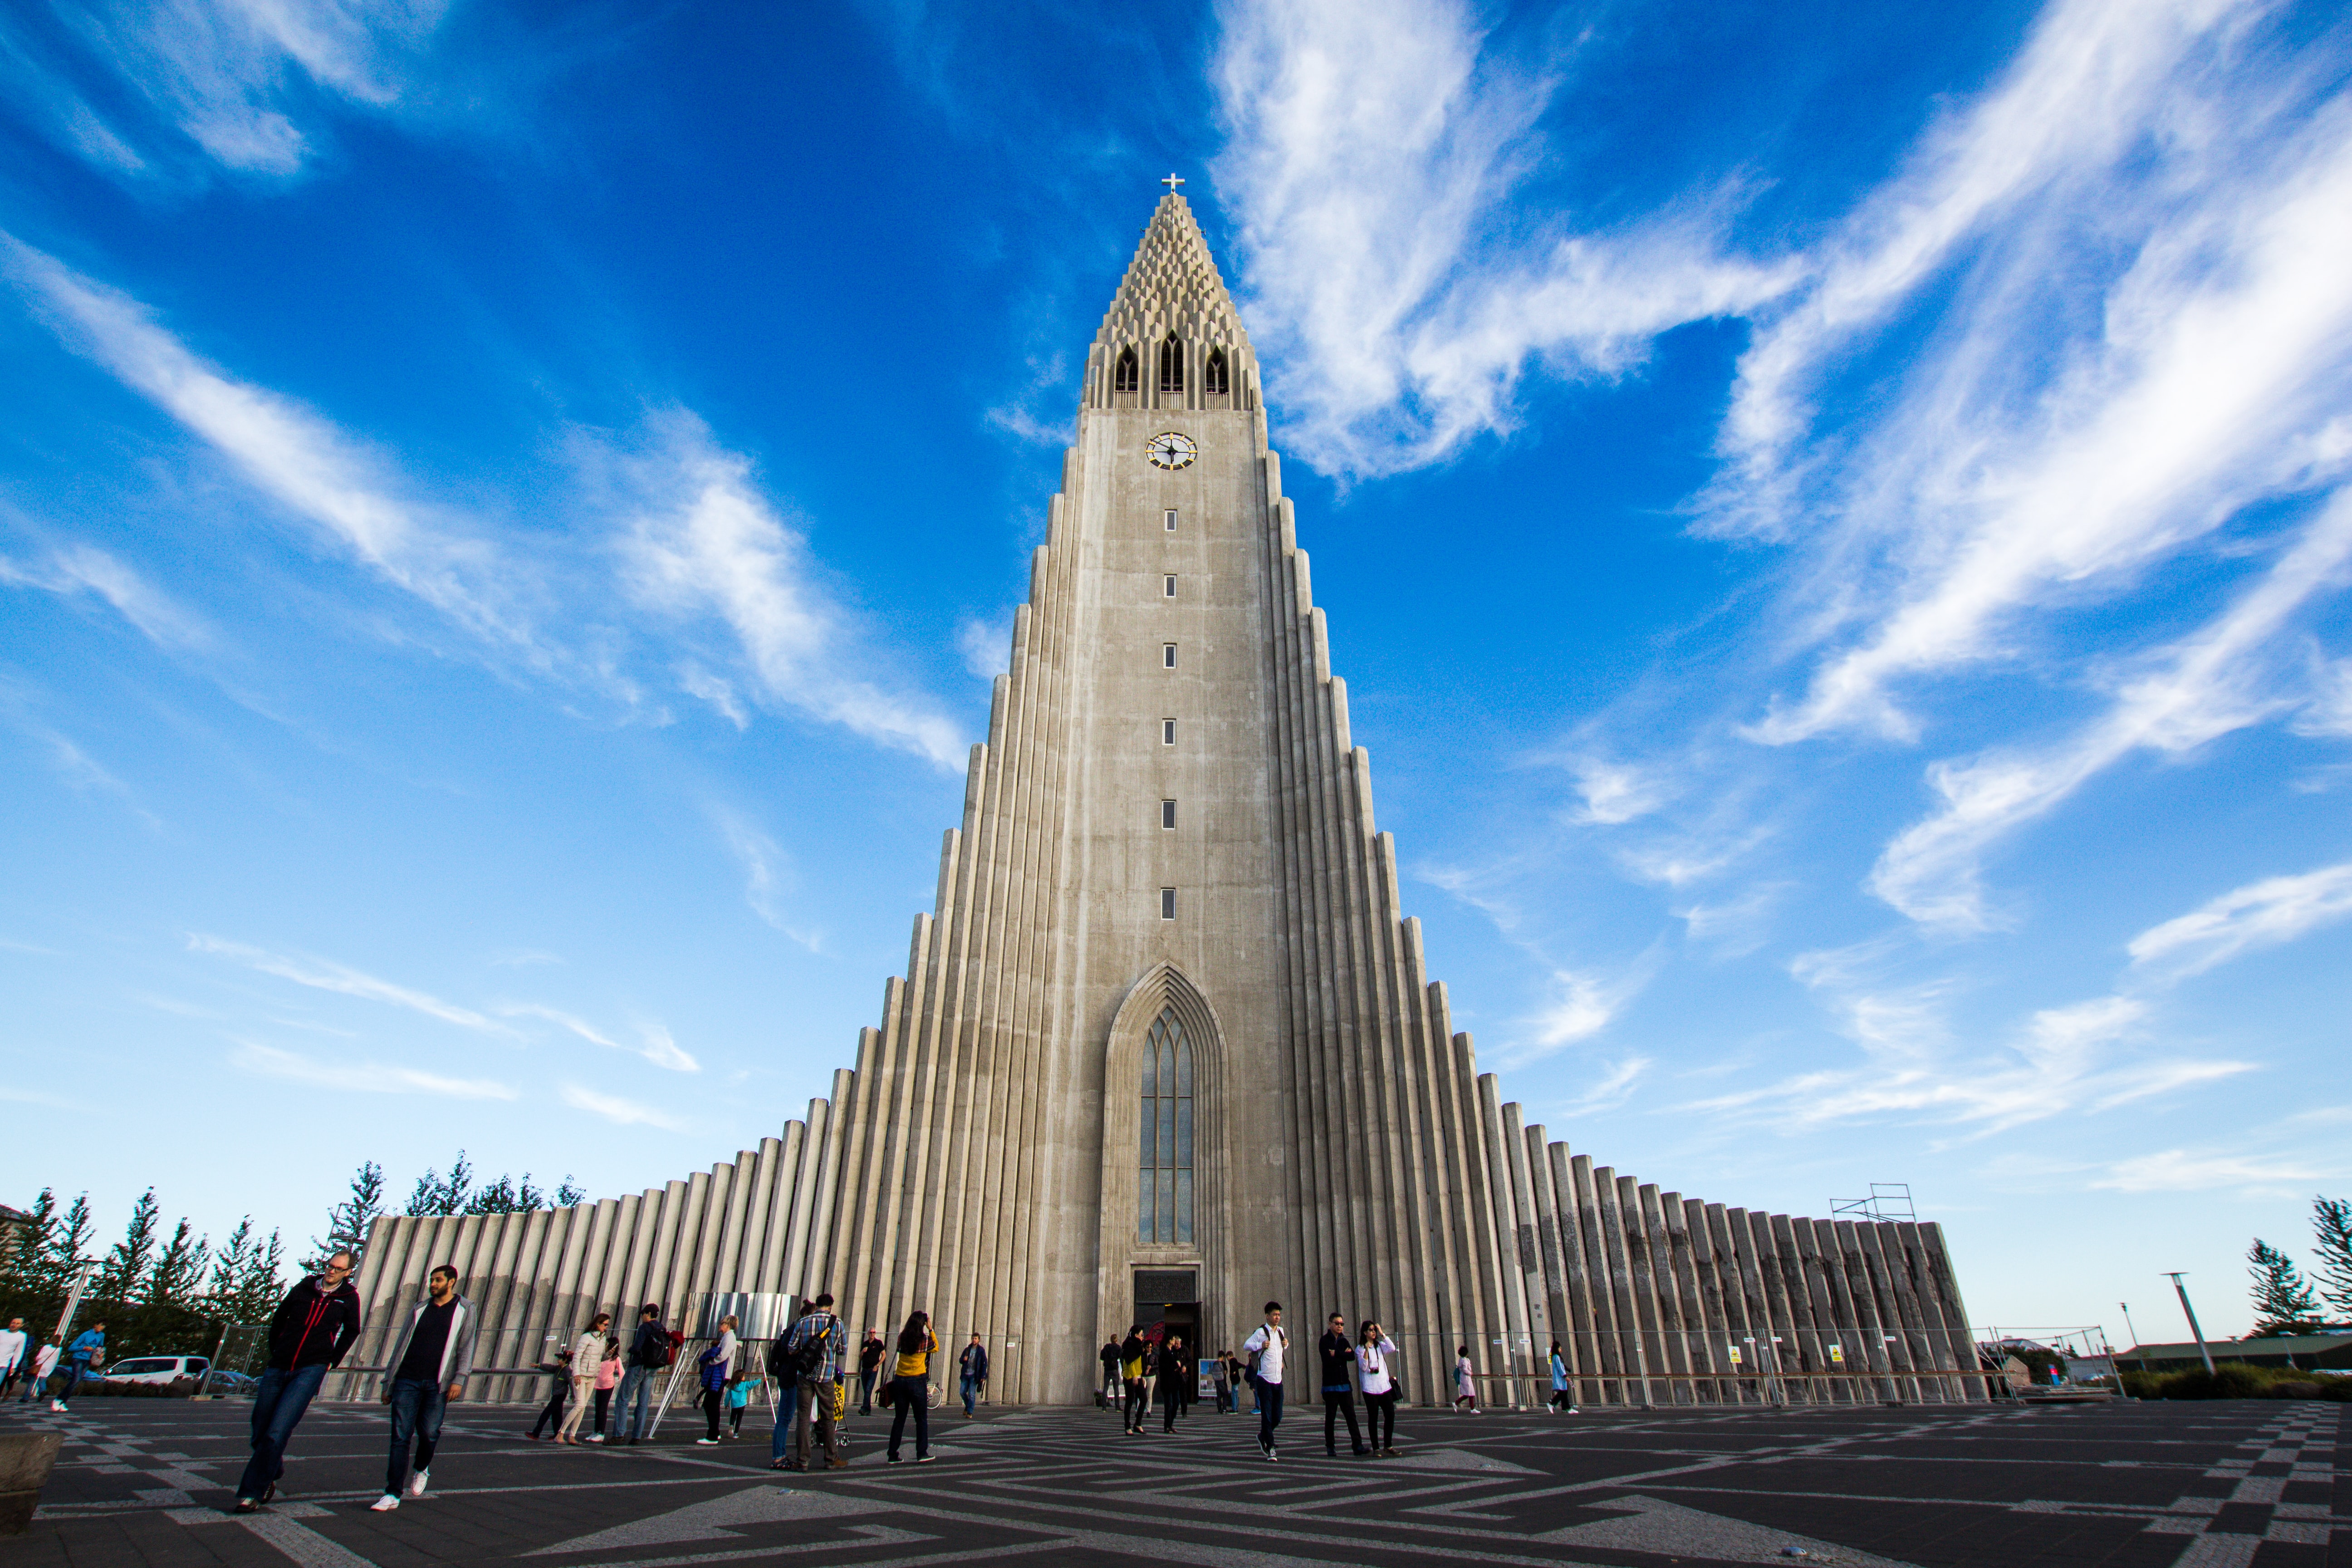 hallgrimskirkja church in Iceland
Things to do in Reykjavik
